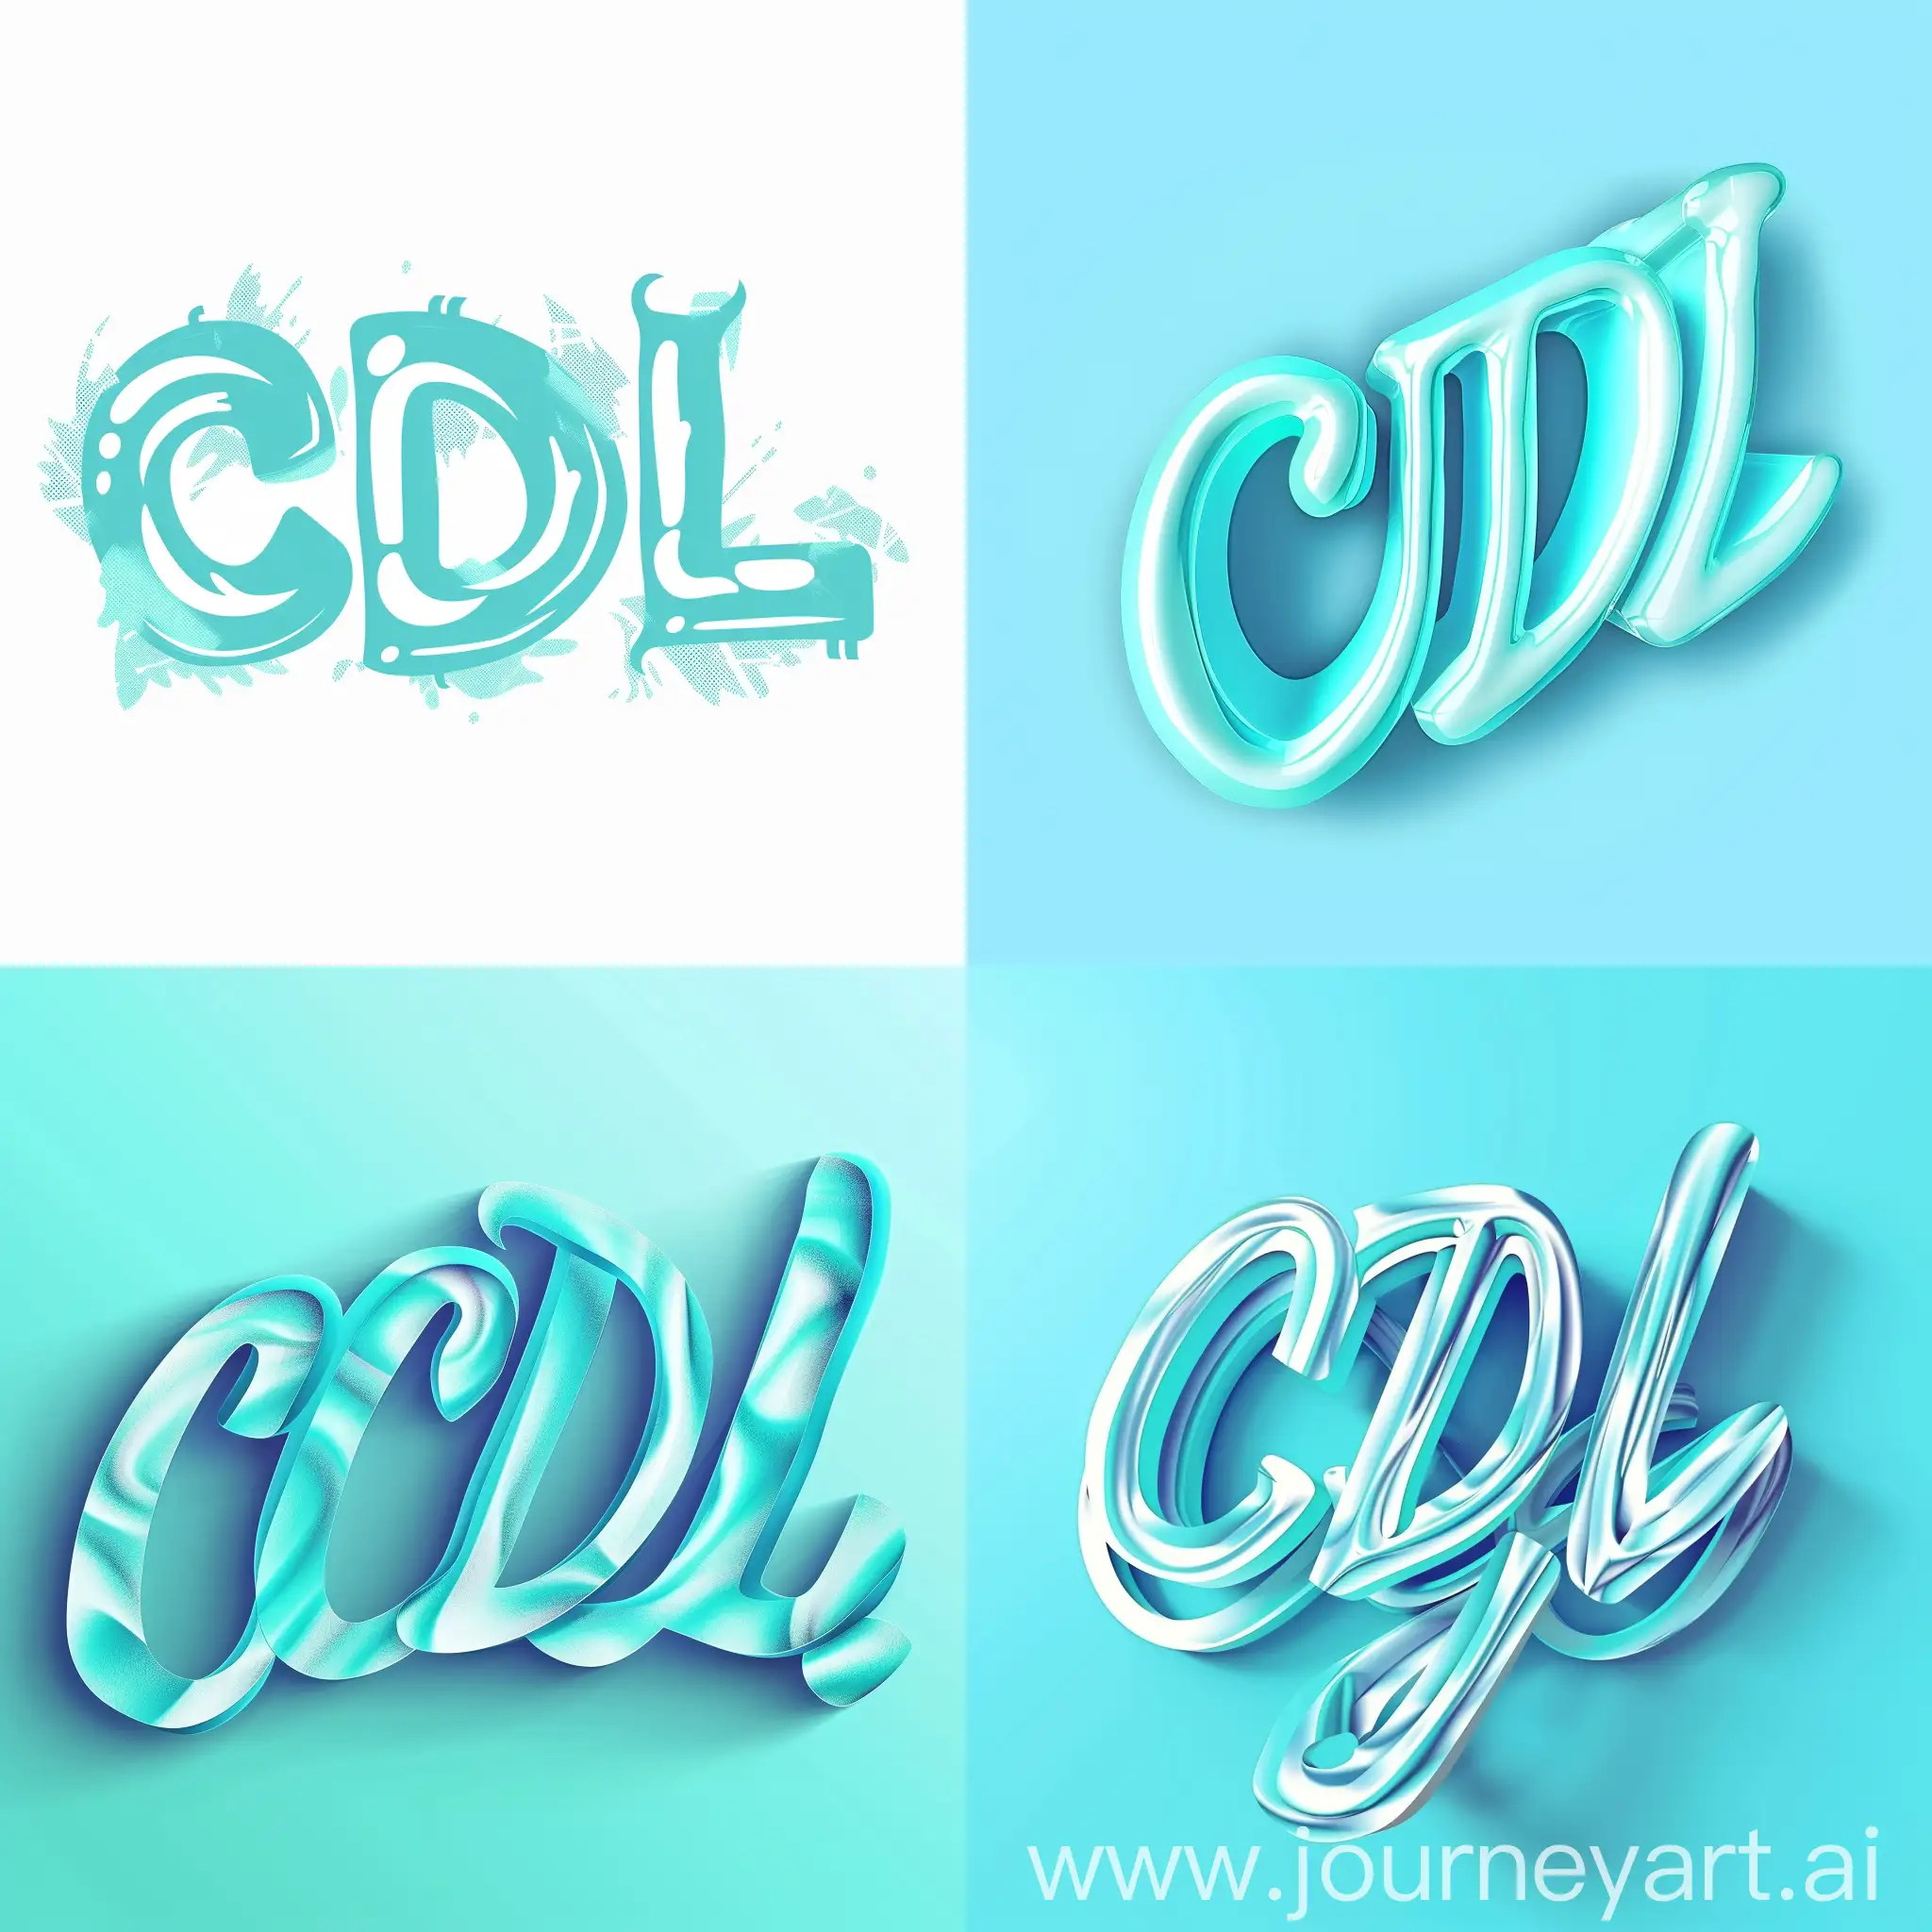 Dancing-Script-2D-Vector-Logo-CDL-in-Light-Blue